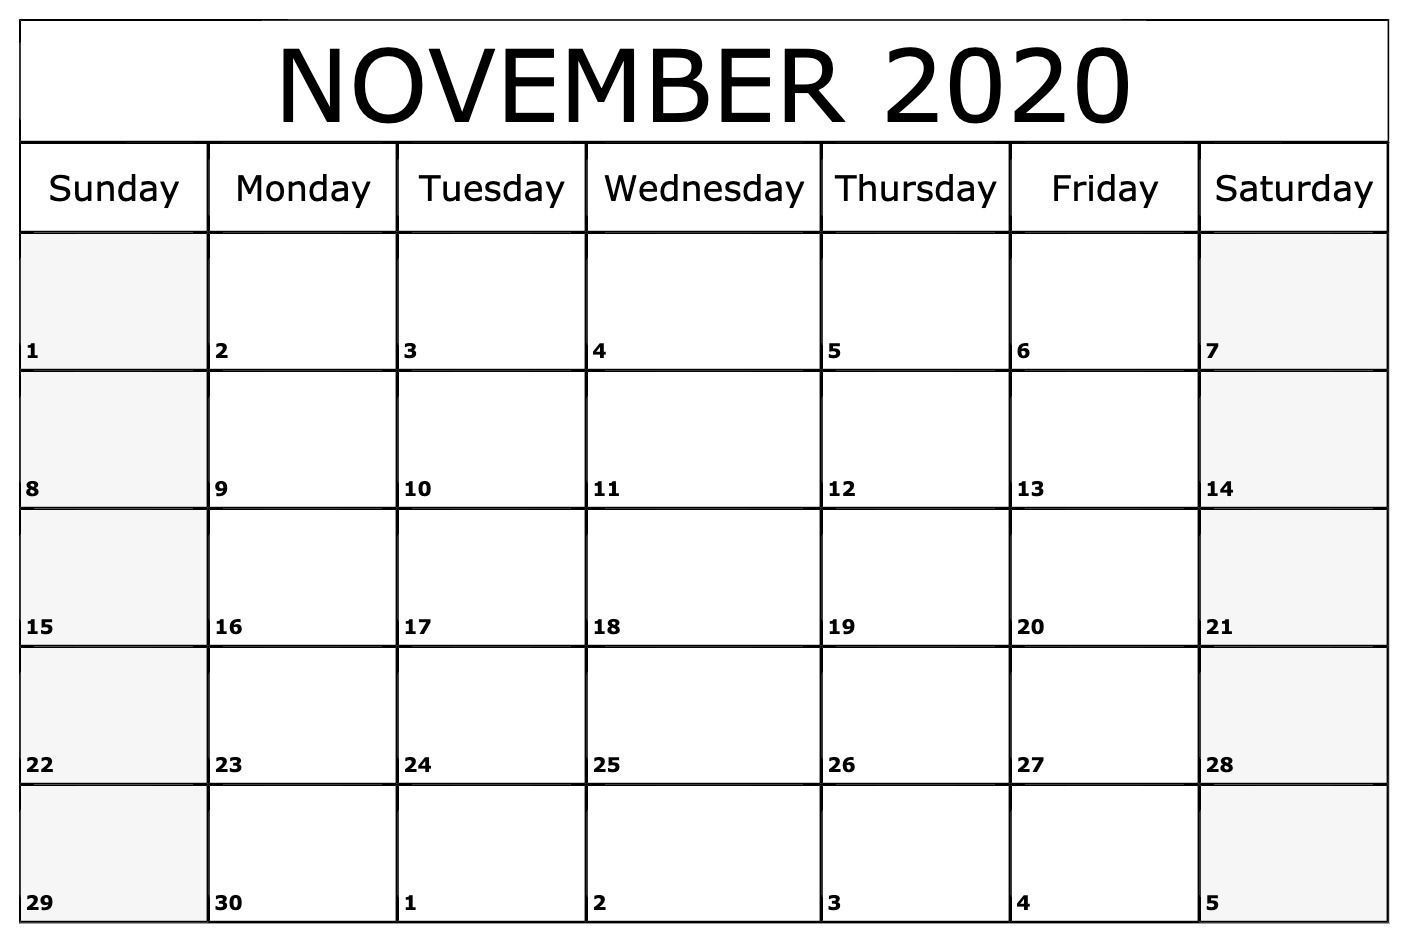 November 2020 Calendar Wallpaper Free November 2020 Calendar Background